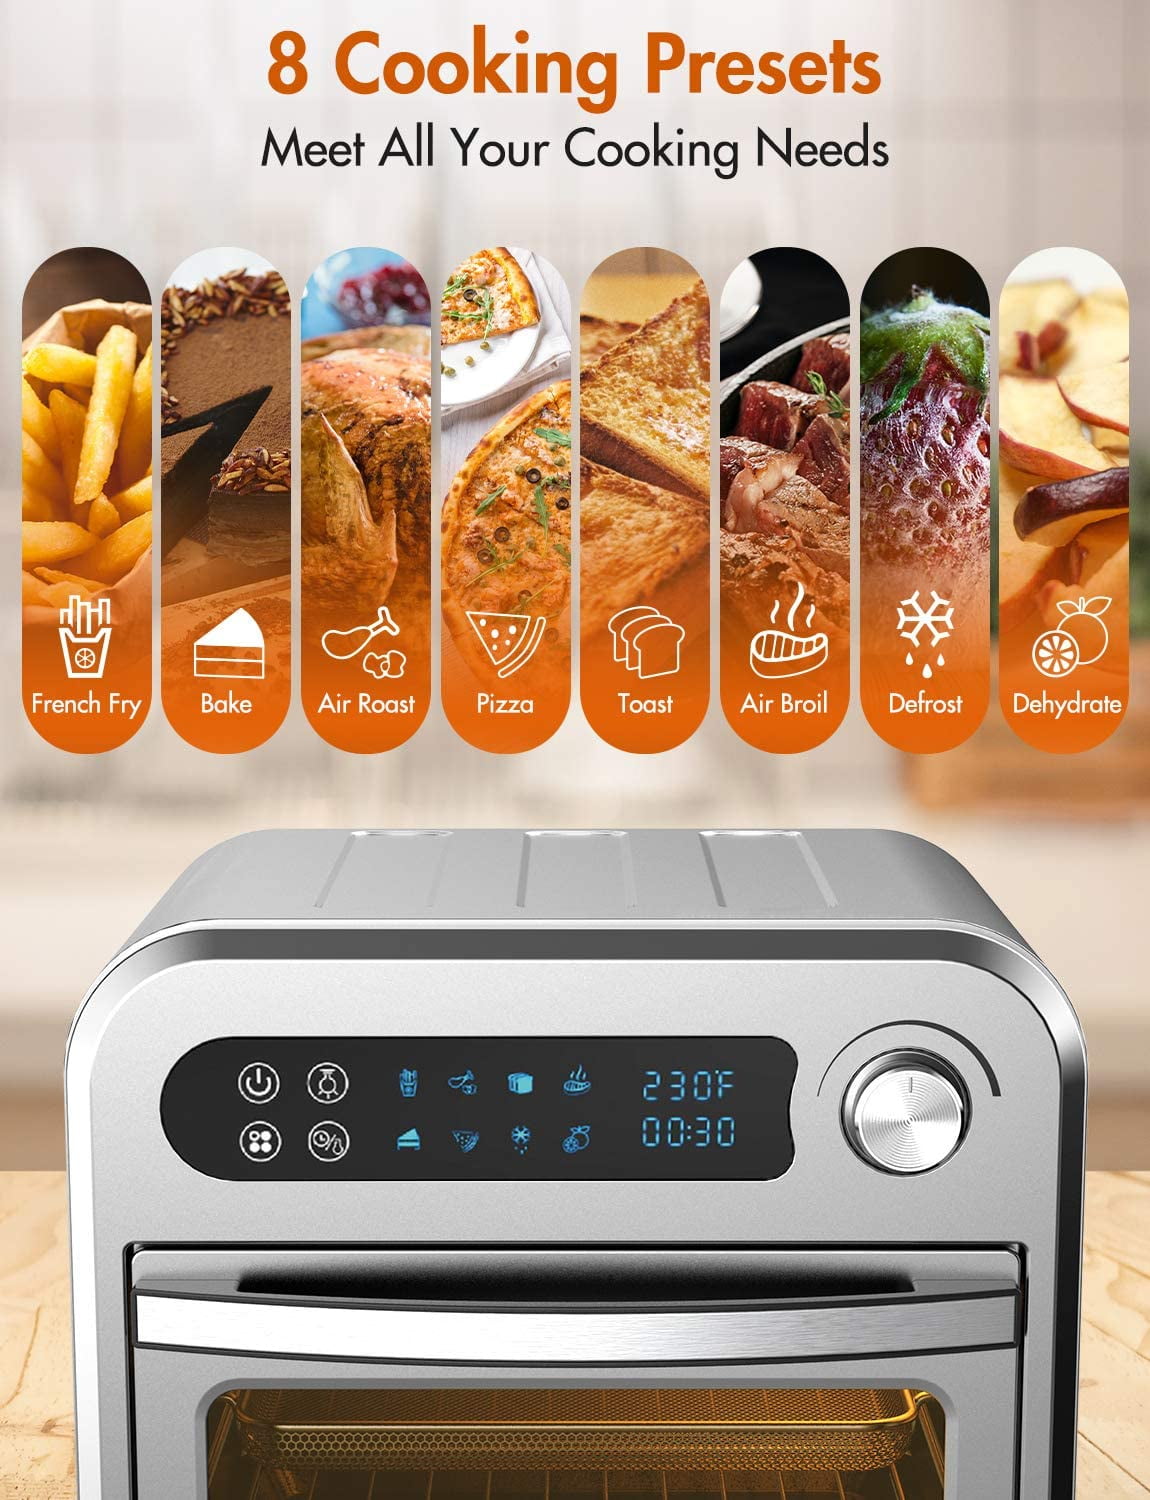 Live - MOOSOO Air Fryer Oven, 10.6 QT Air Fryer Toaster